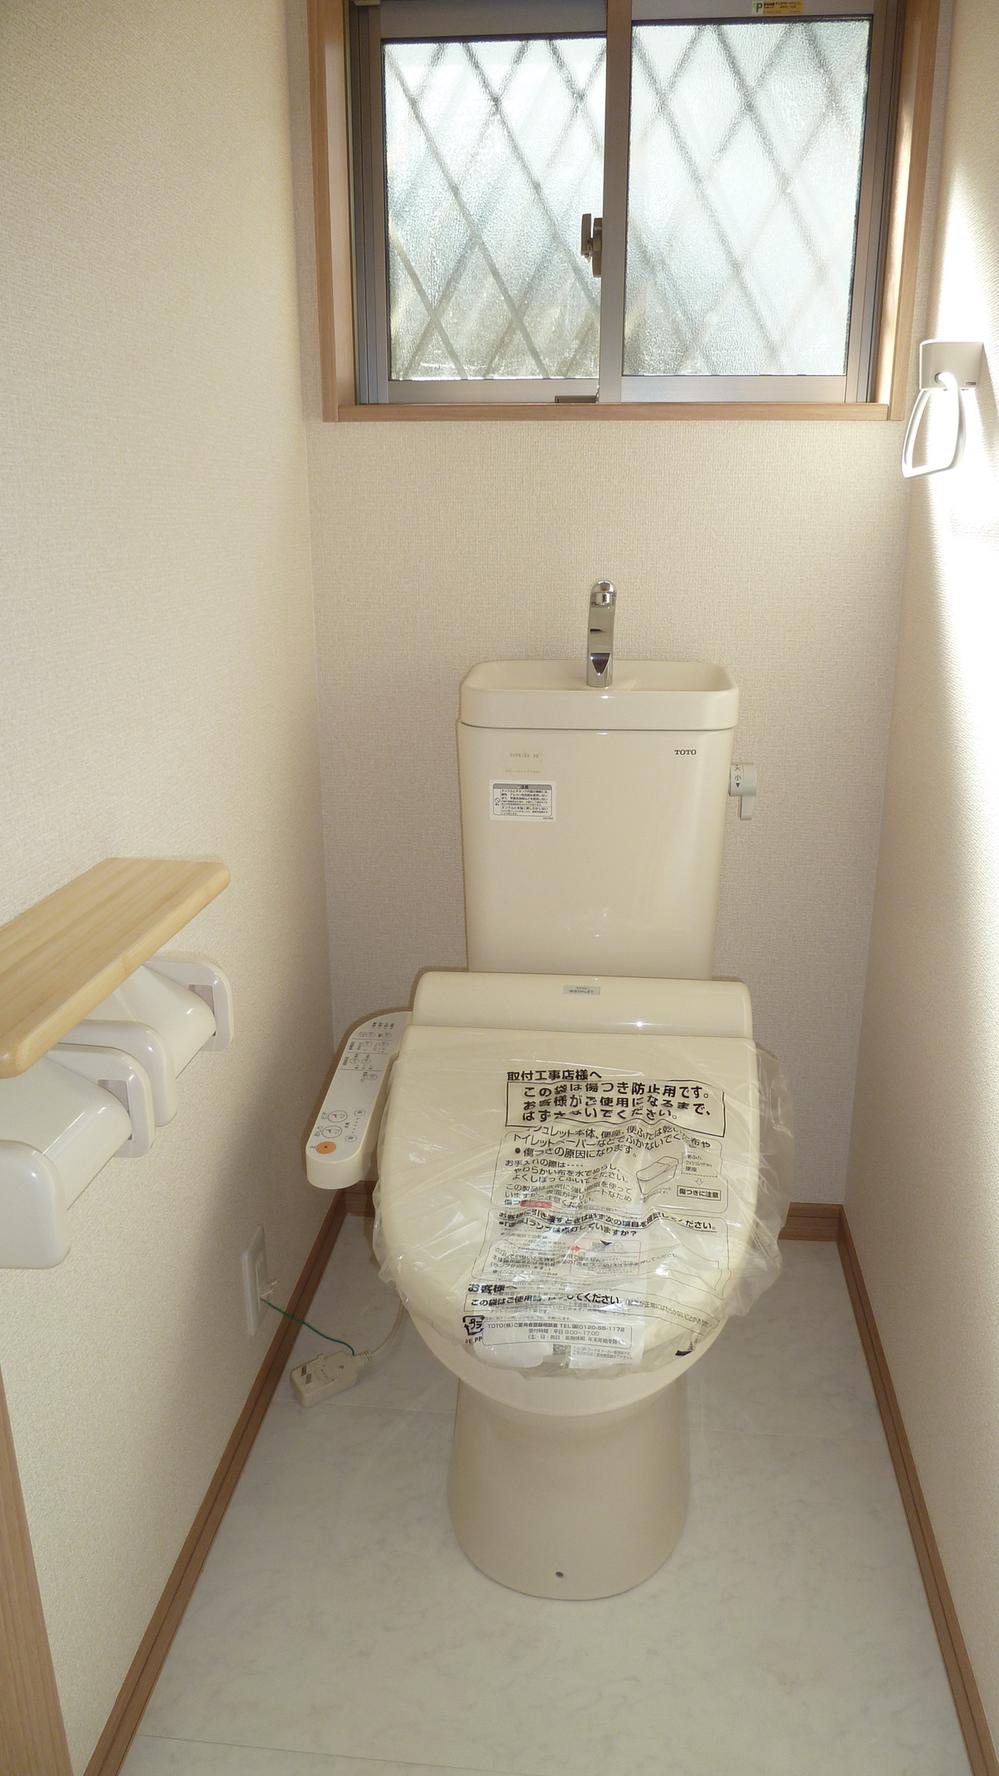 Toilet. Warm water washing toilet seat on each floor both